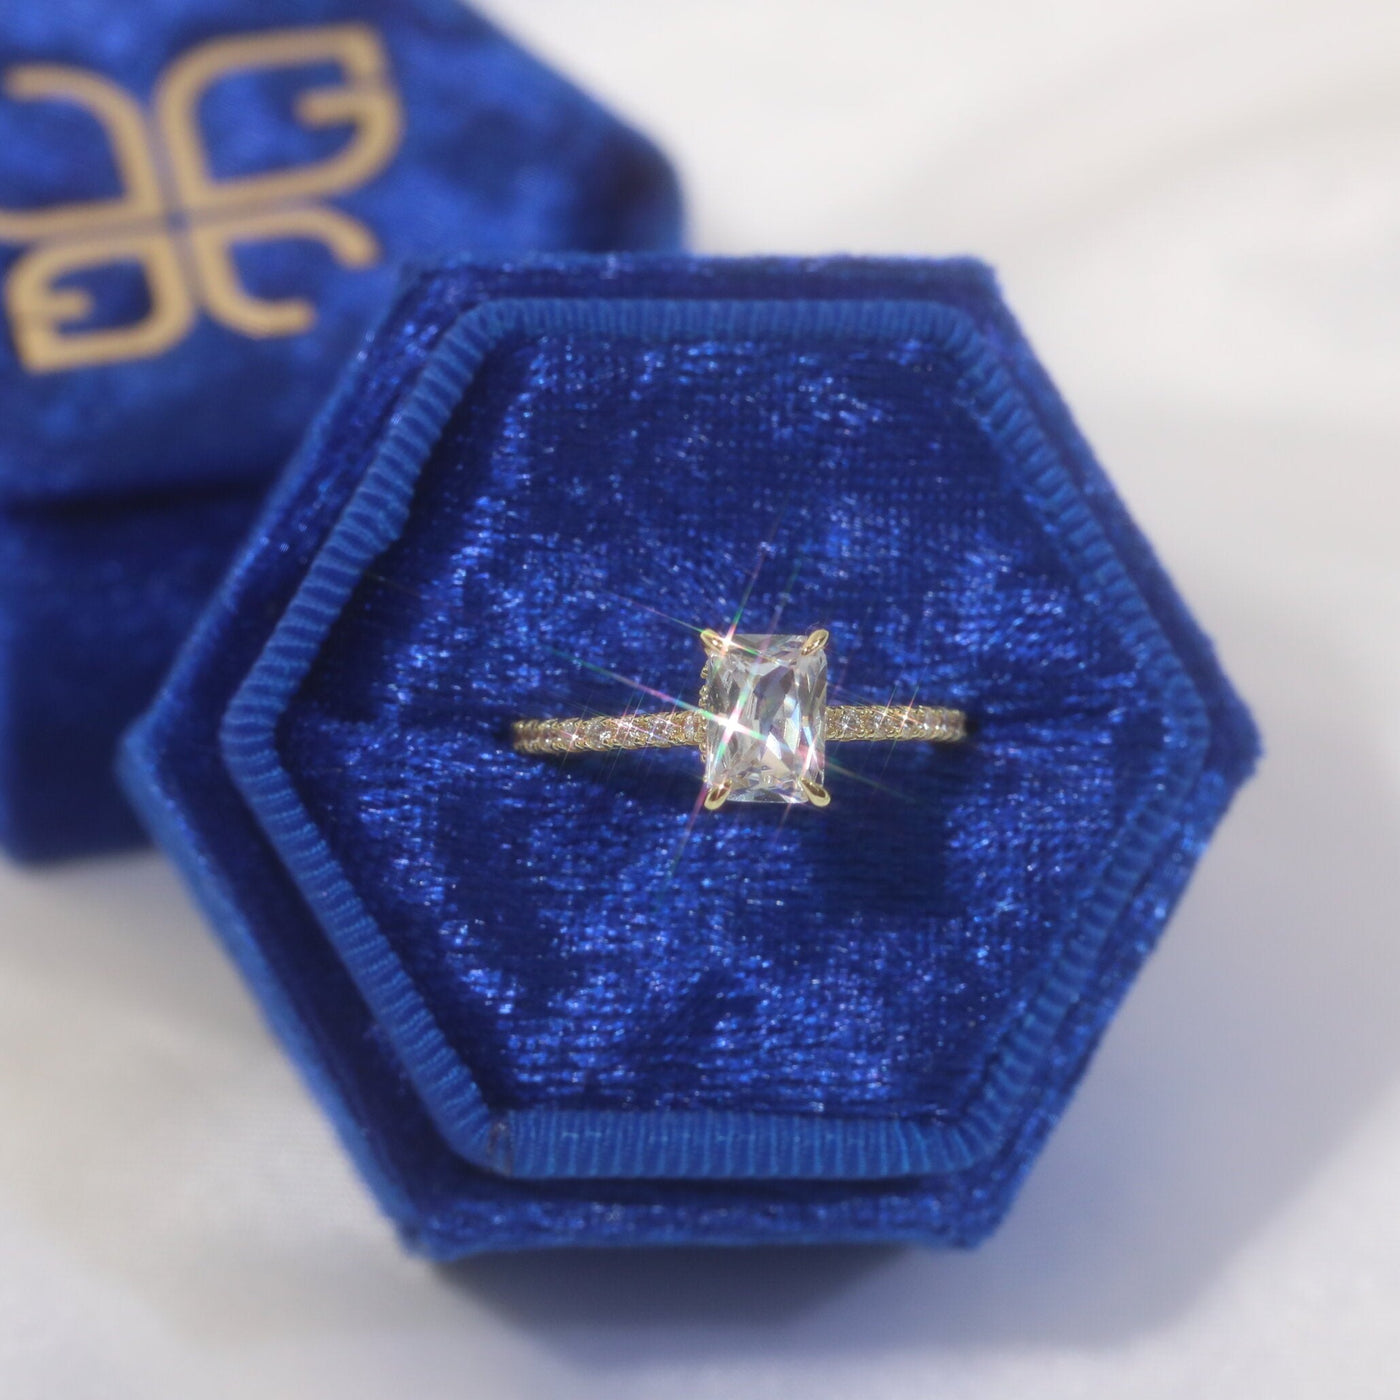 Elegante anillo de diamantes